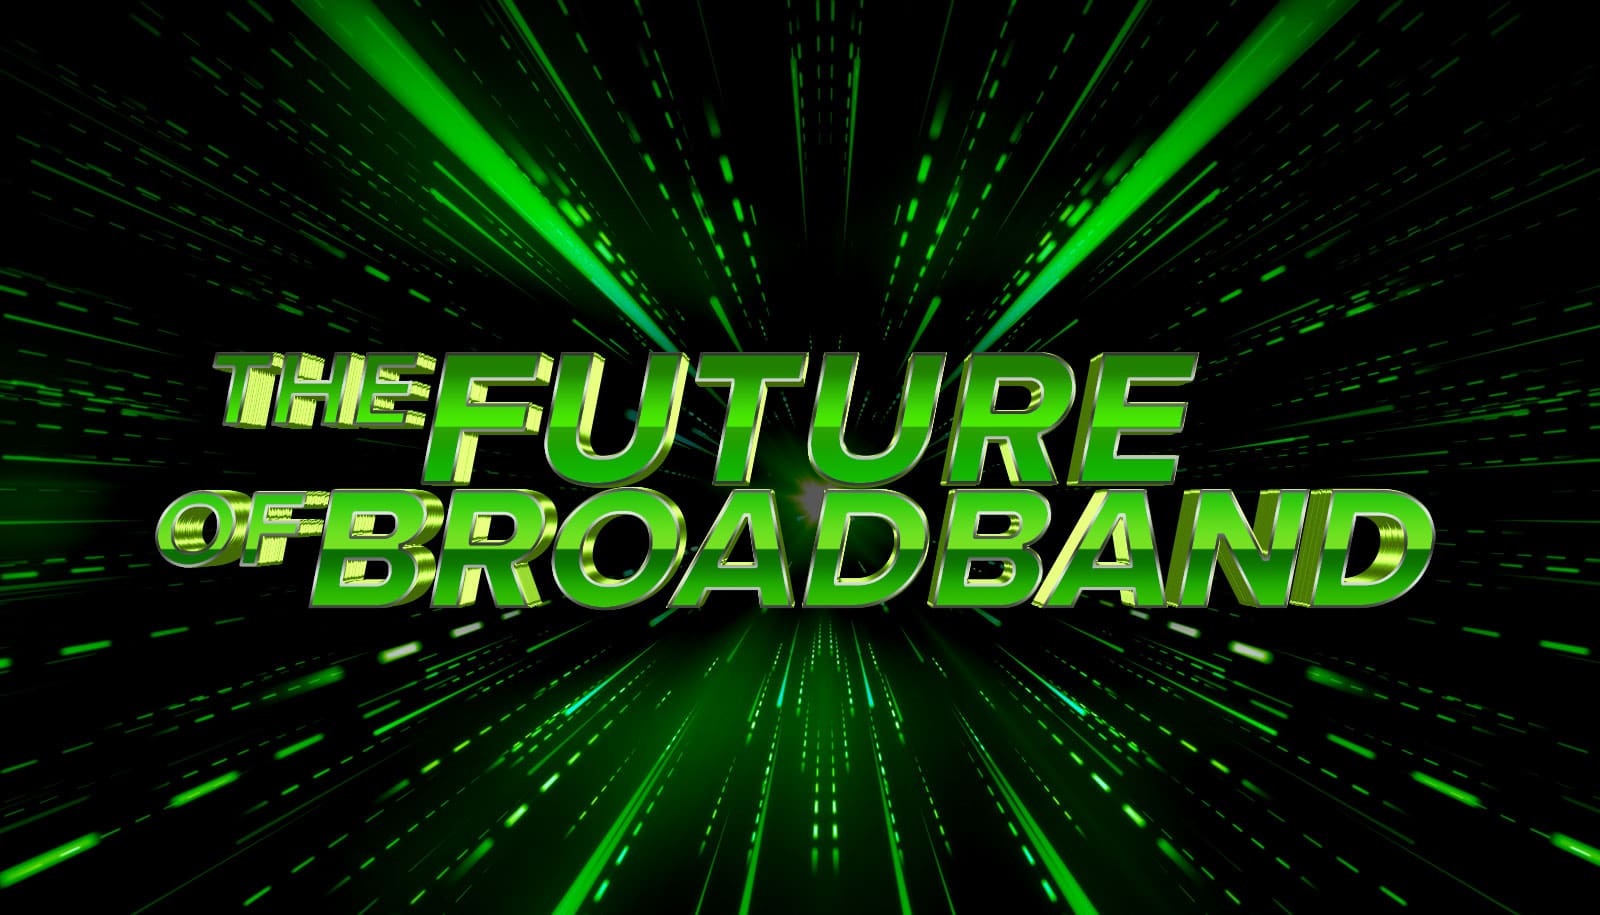 The Future of Broadband